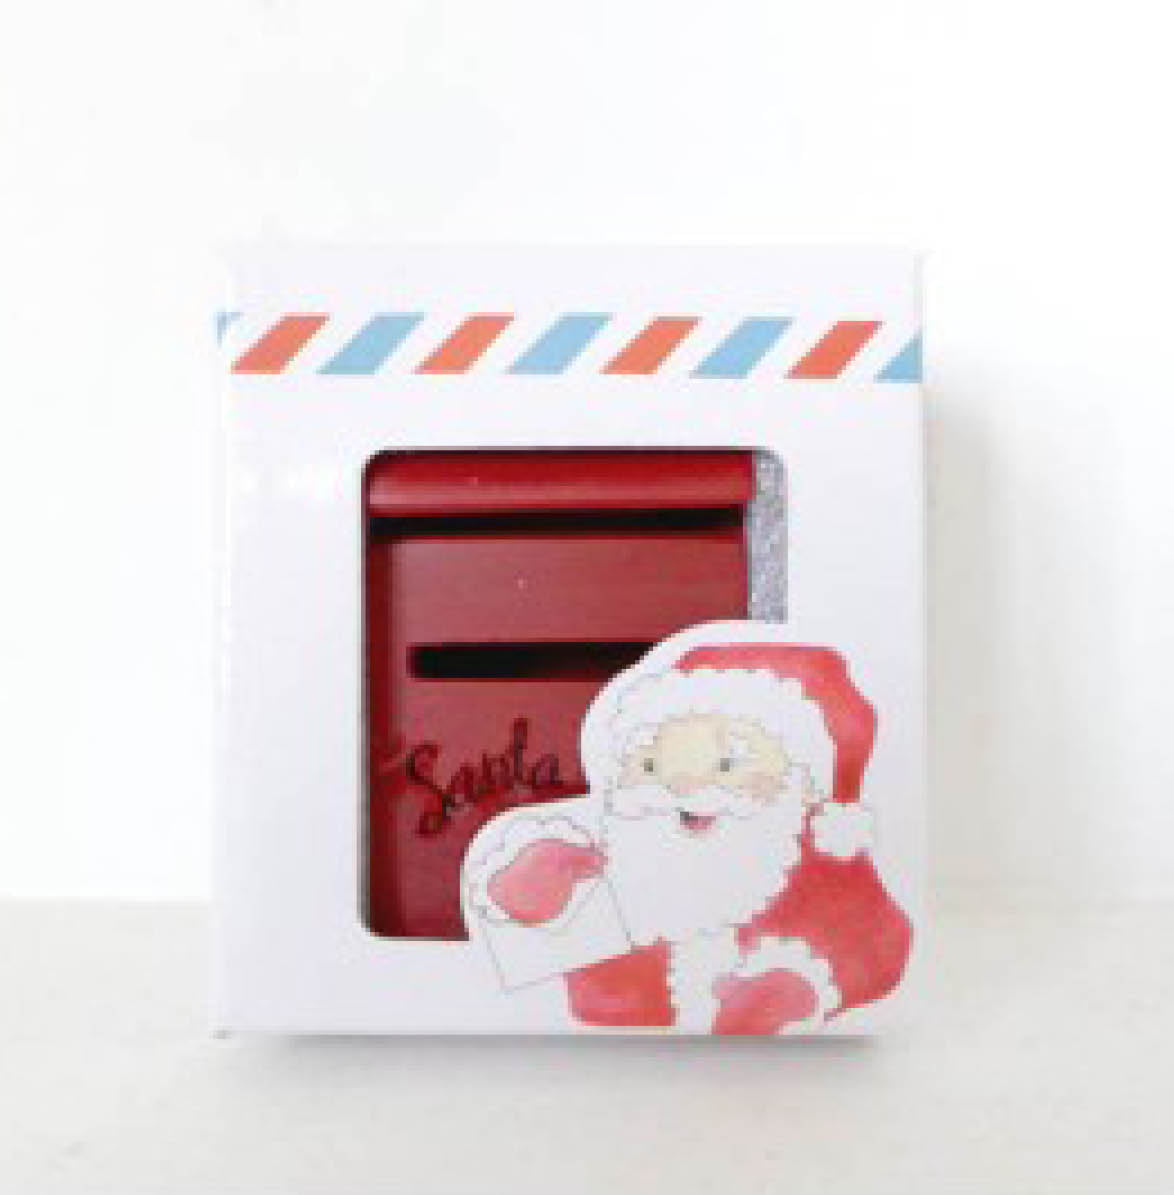 Fairy Mailbox Santa